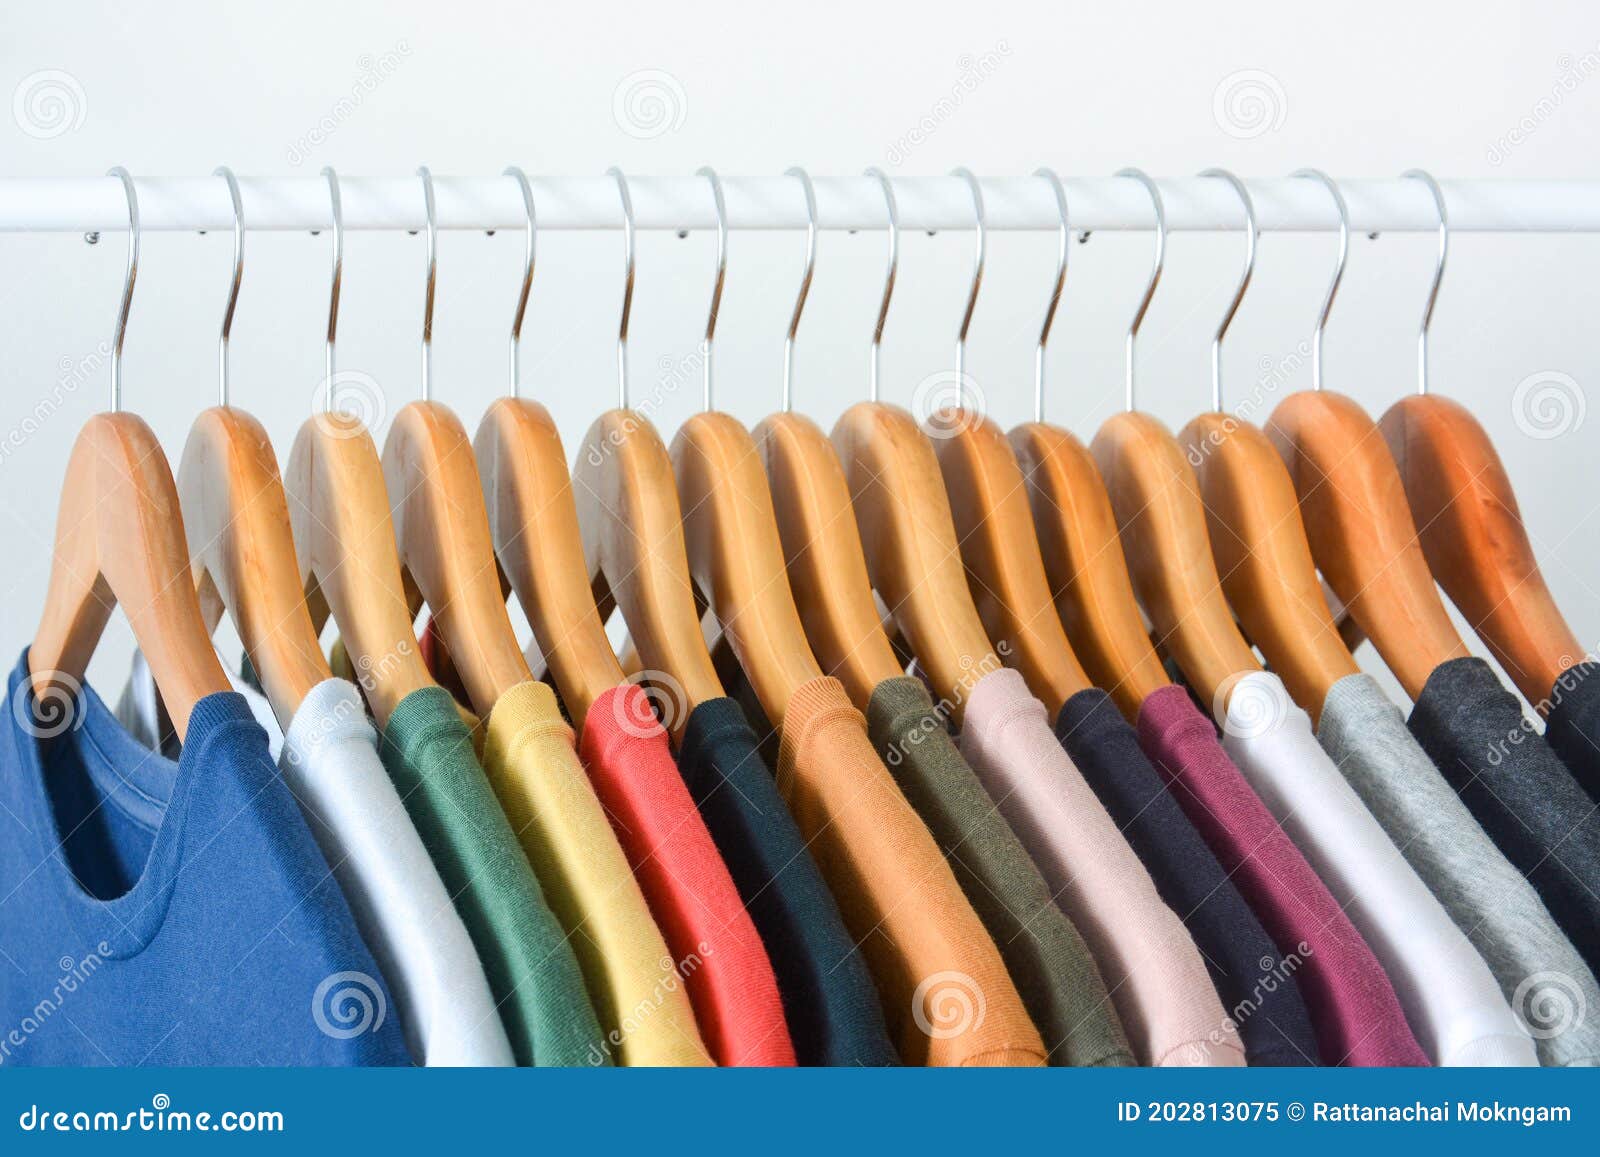 Plastic Orange Clothes Hanger Set, For Cloth Hanging